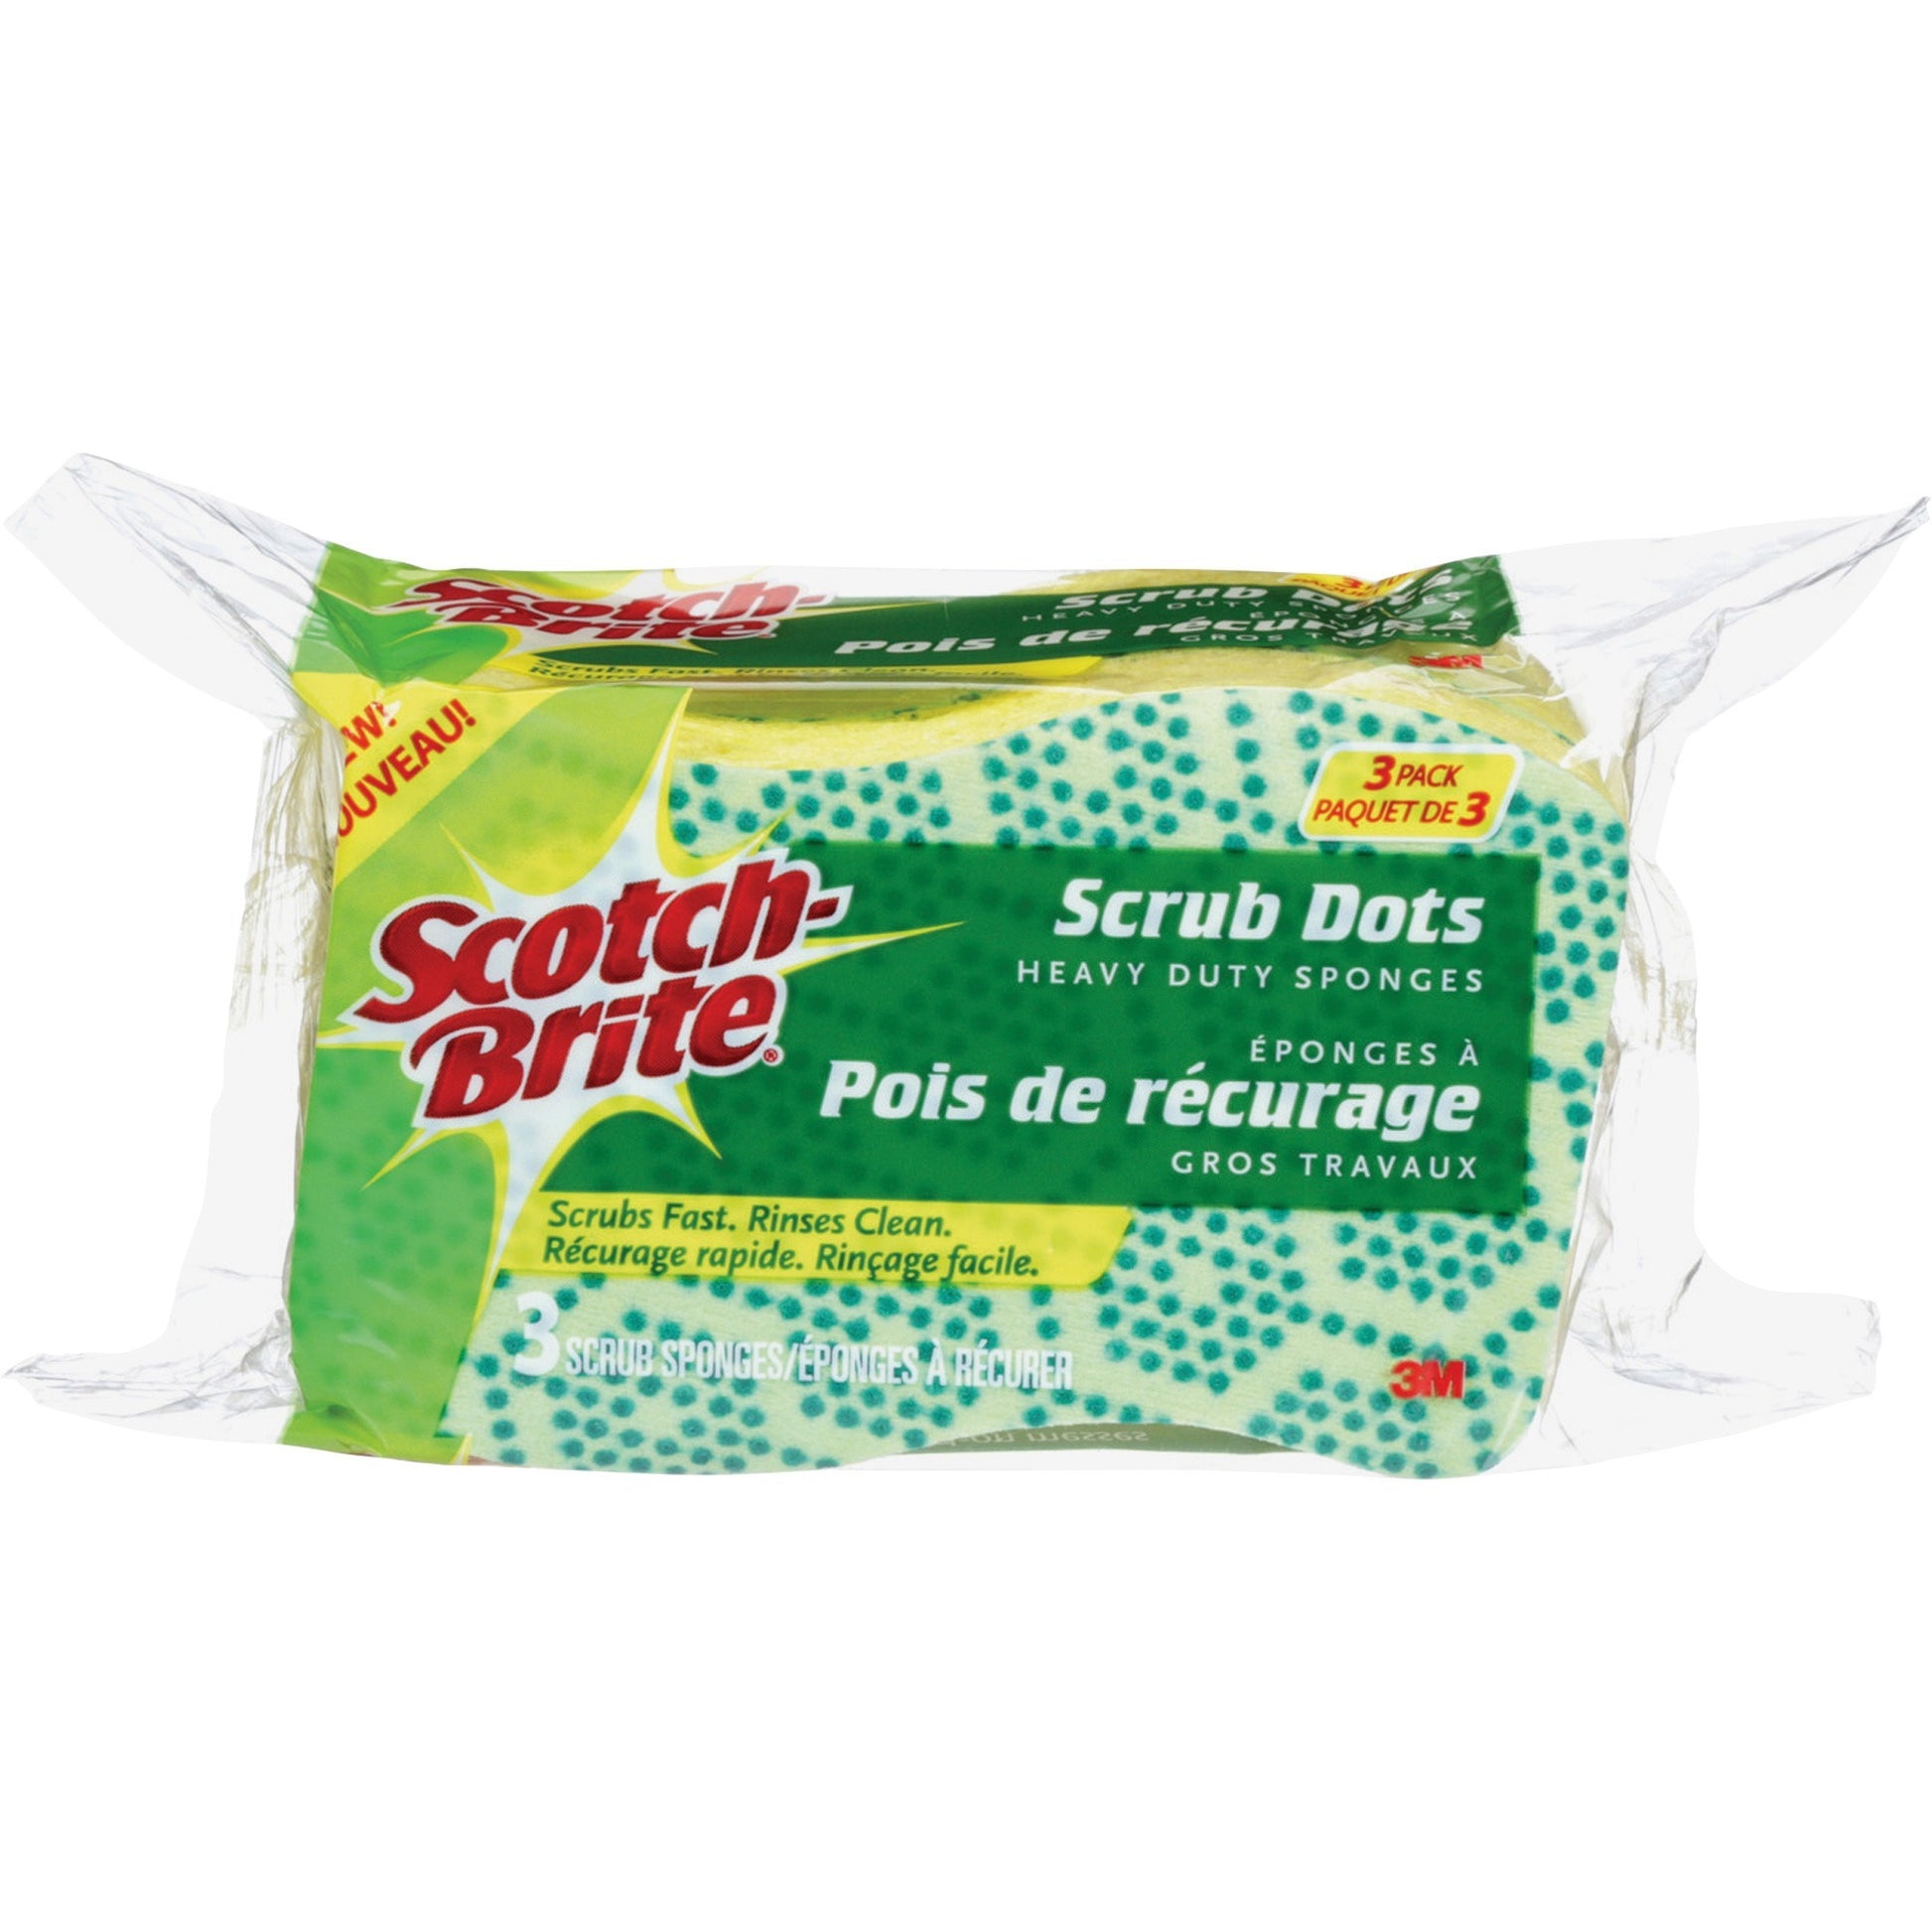 Scotch-Brite Scrub Dots Heavy-duty Scrub Sponge